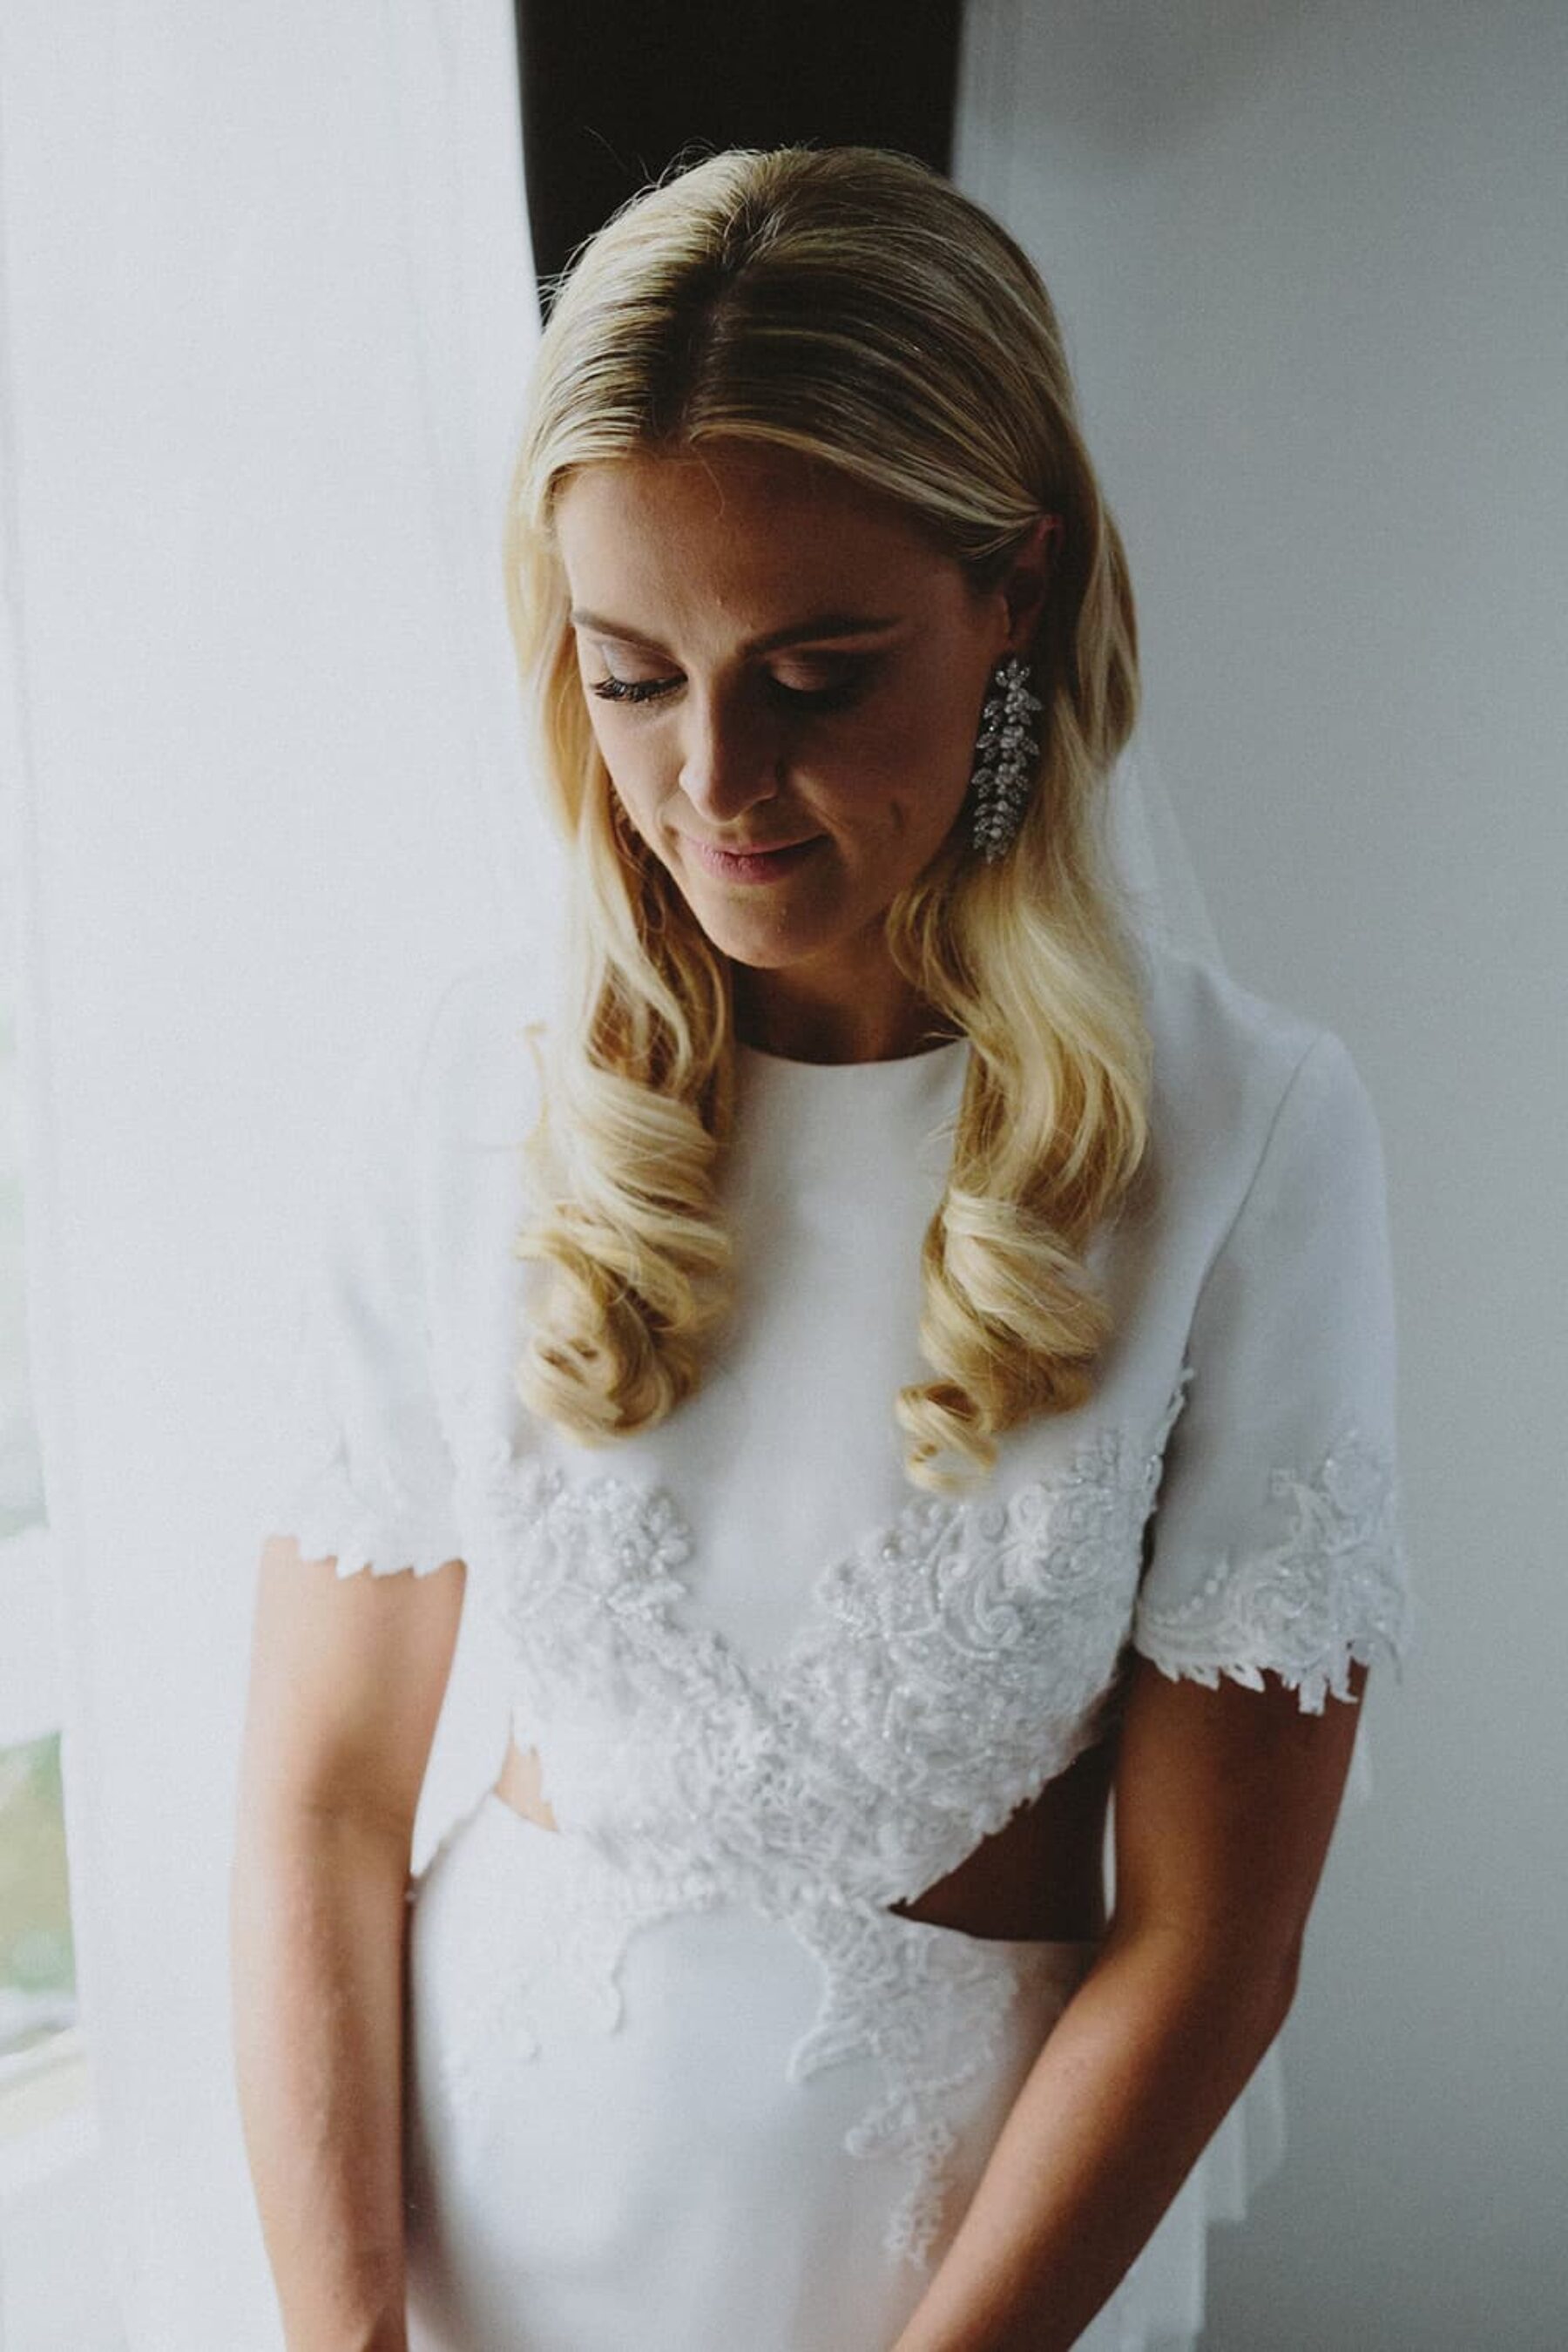 modern wedding dress with bodice cut-out